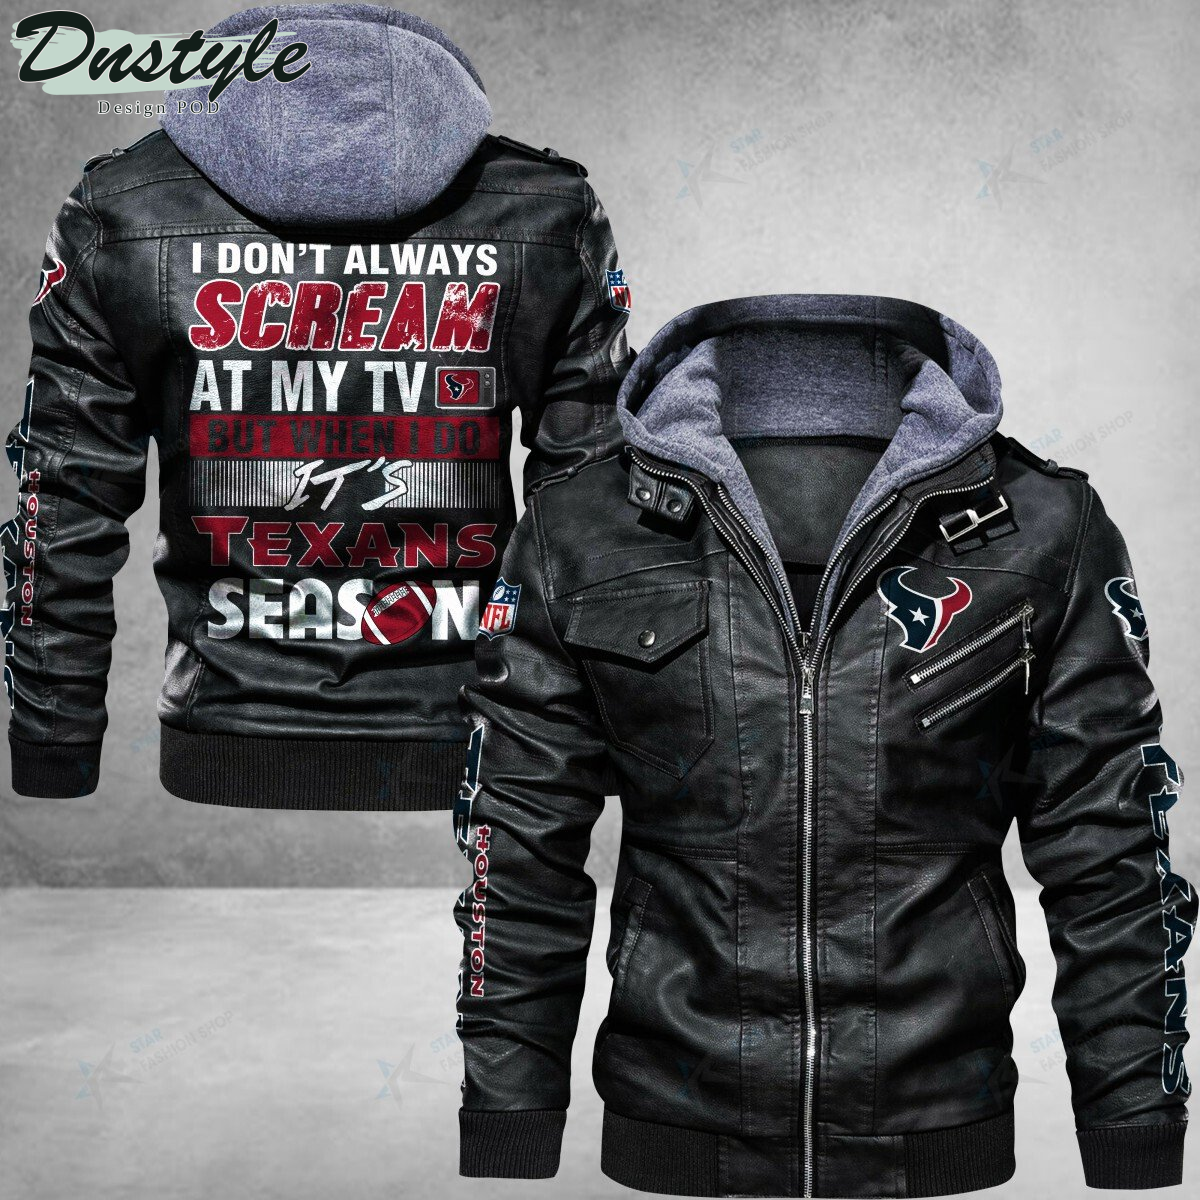 Houston Texans I don’t Always Scream At My TV Leather Jacket